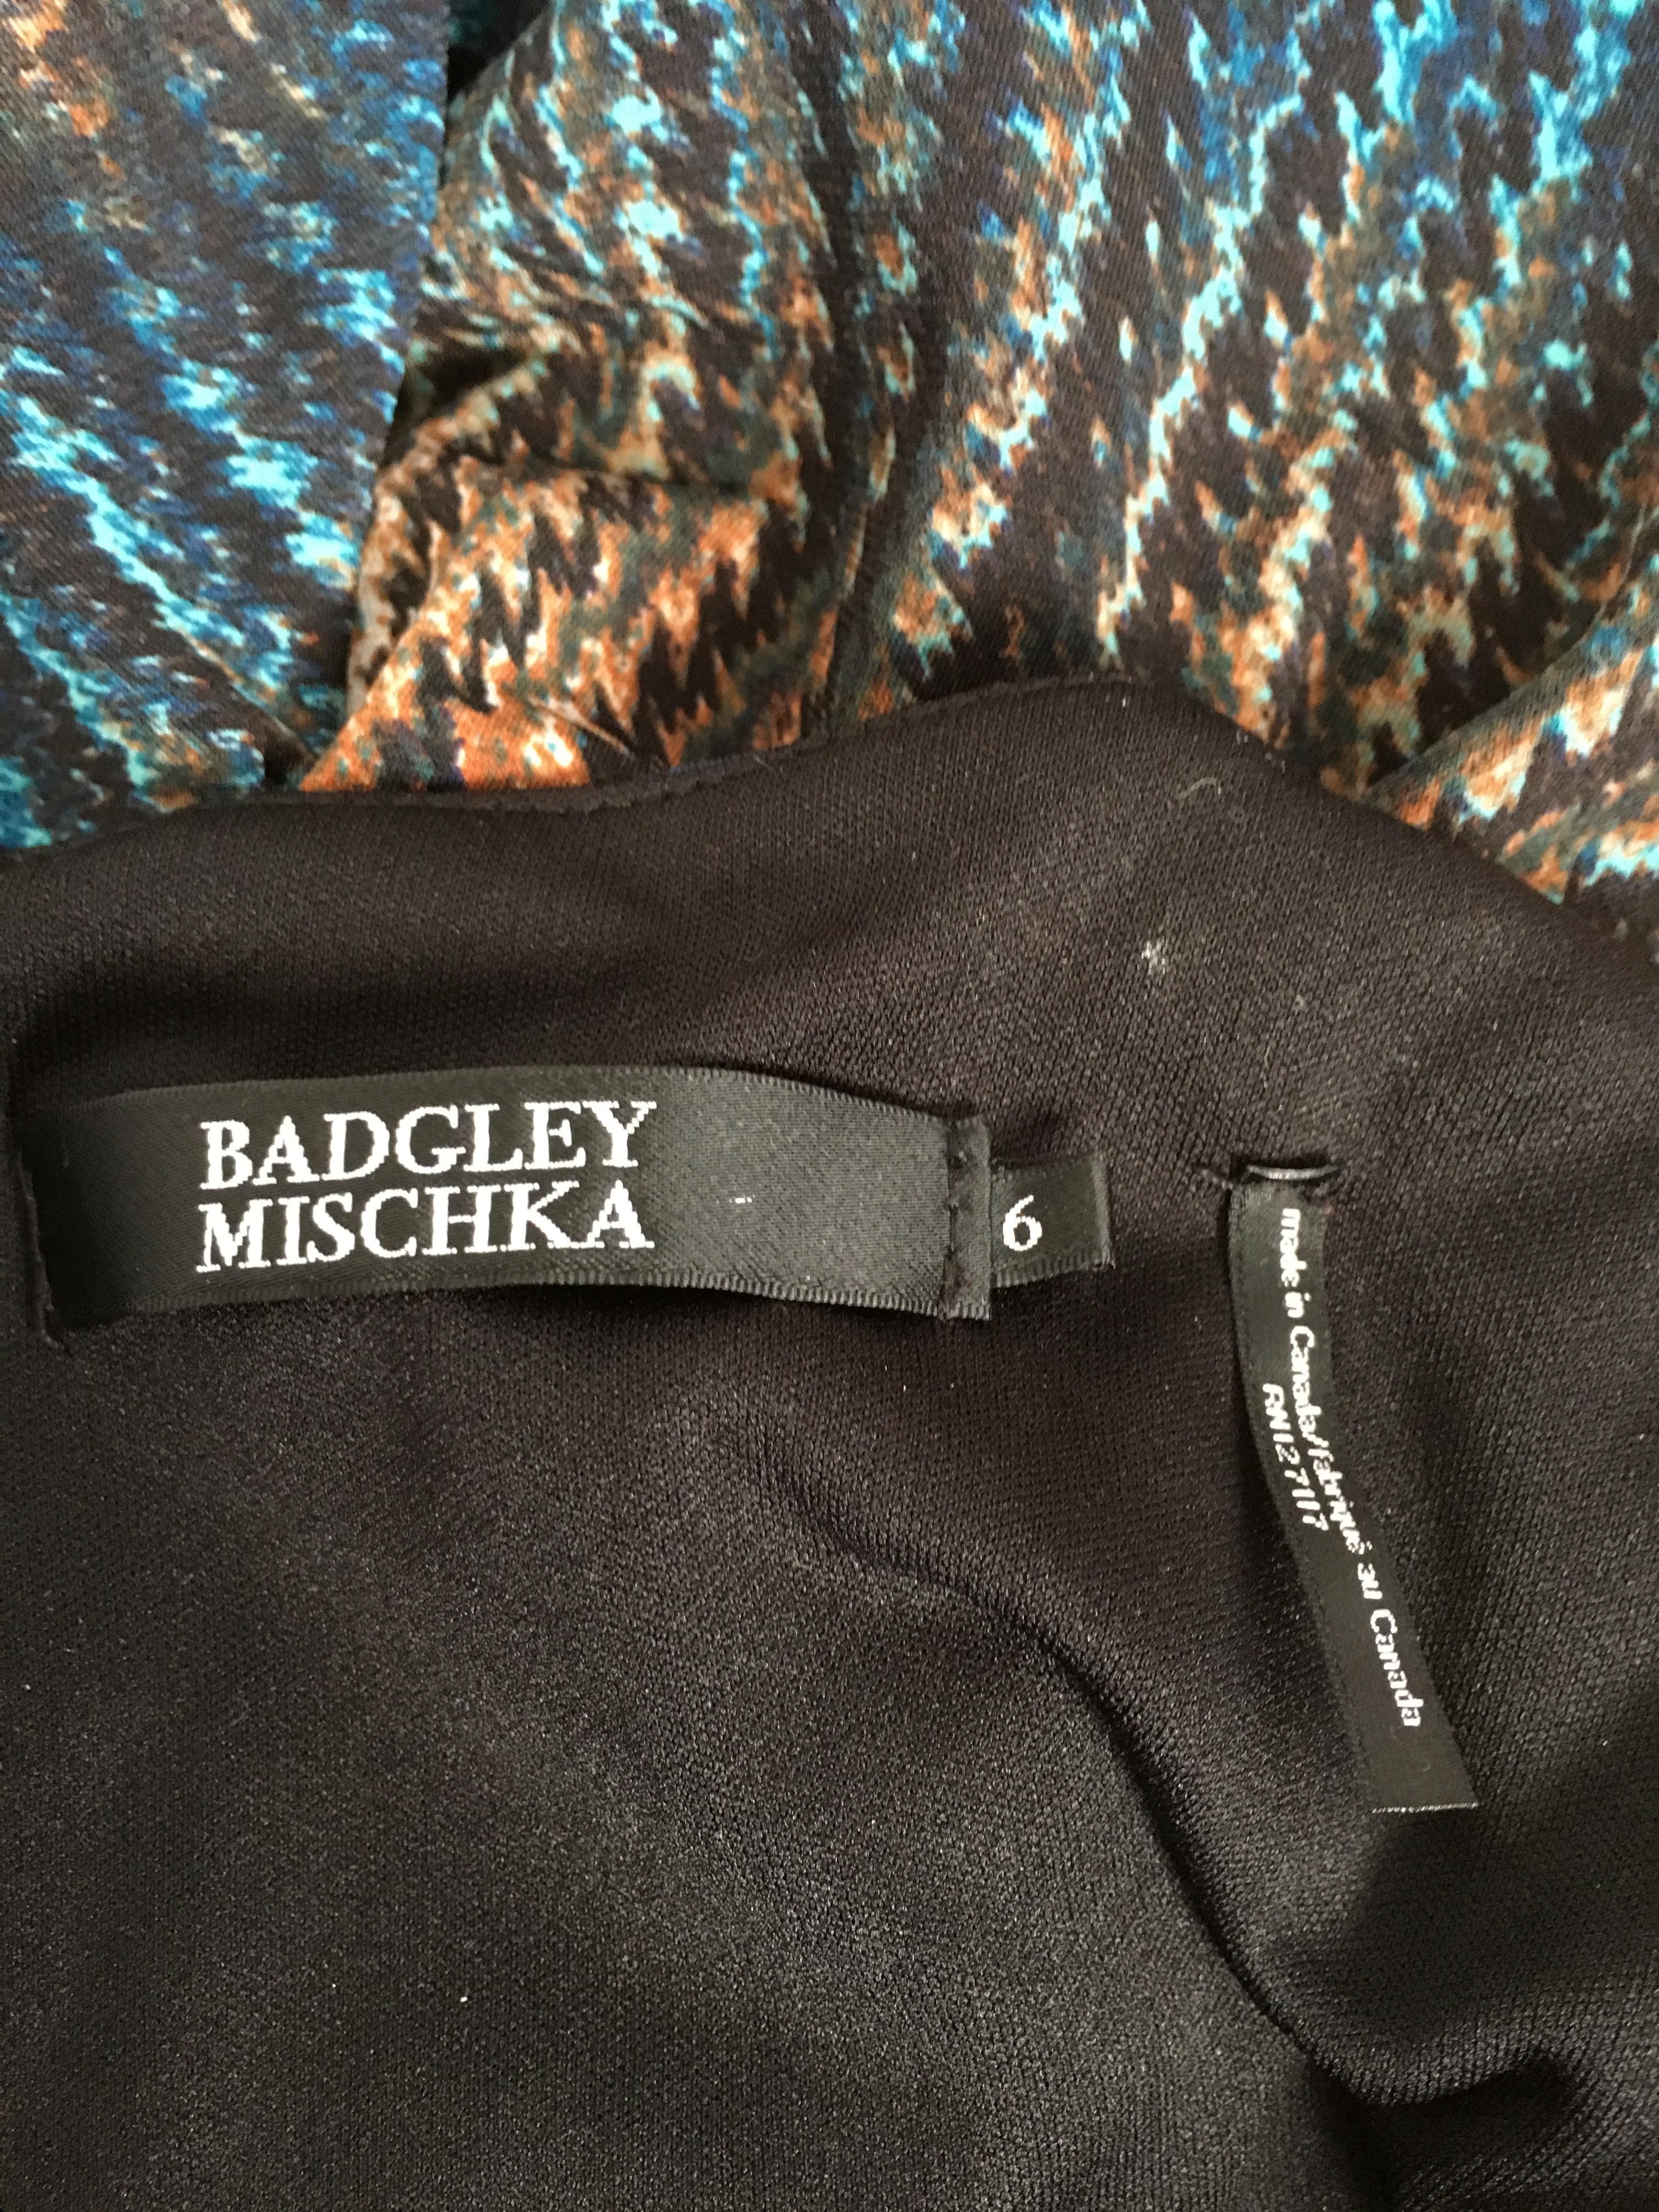 Badgley Mischka Sheath Ruched Dress Size 6.  Made in Canada.  10